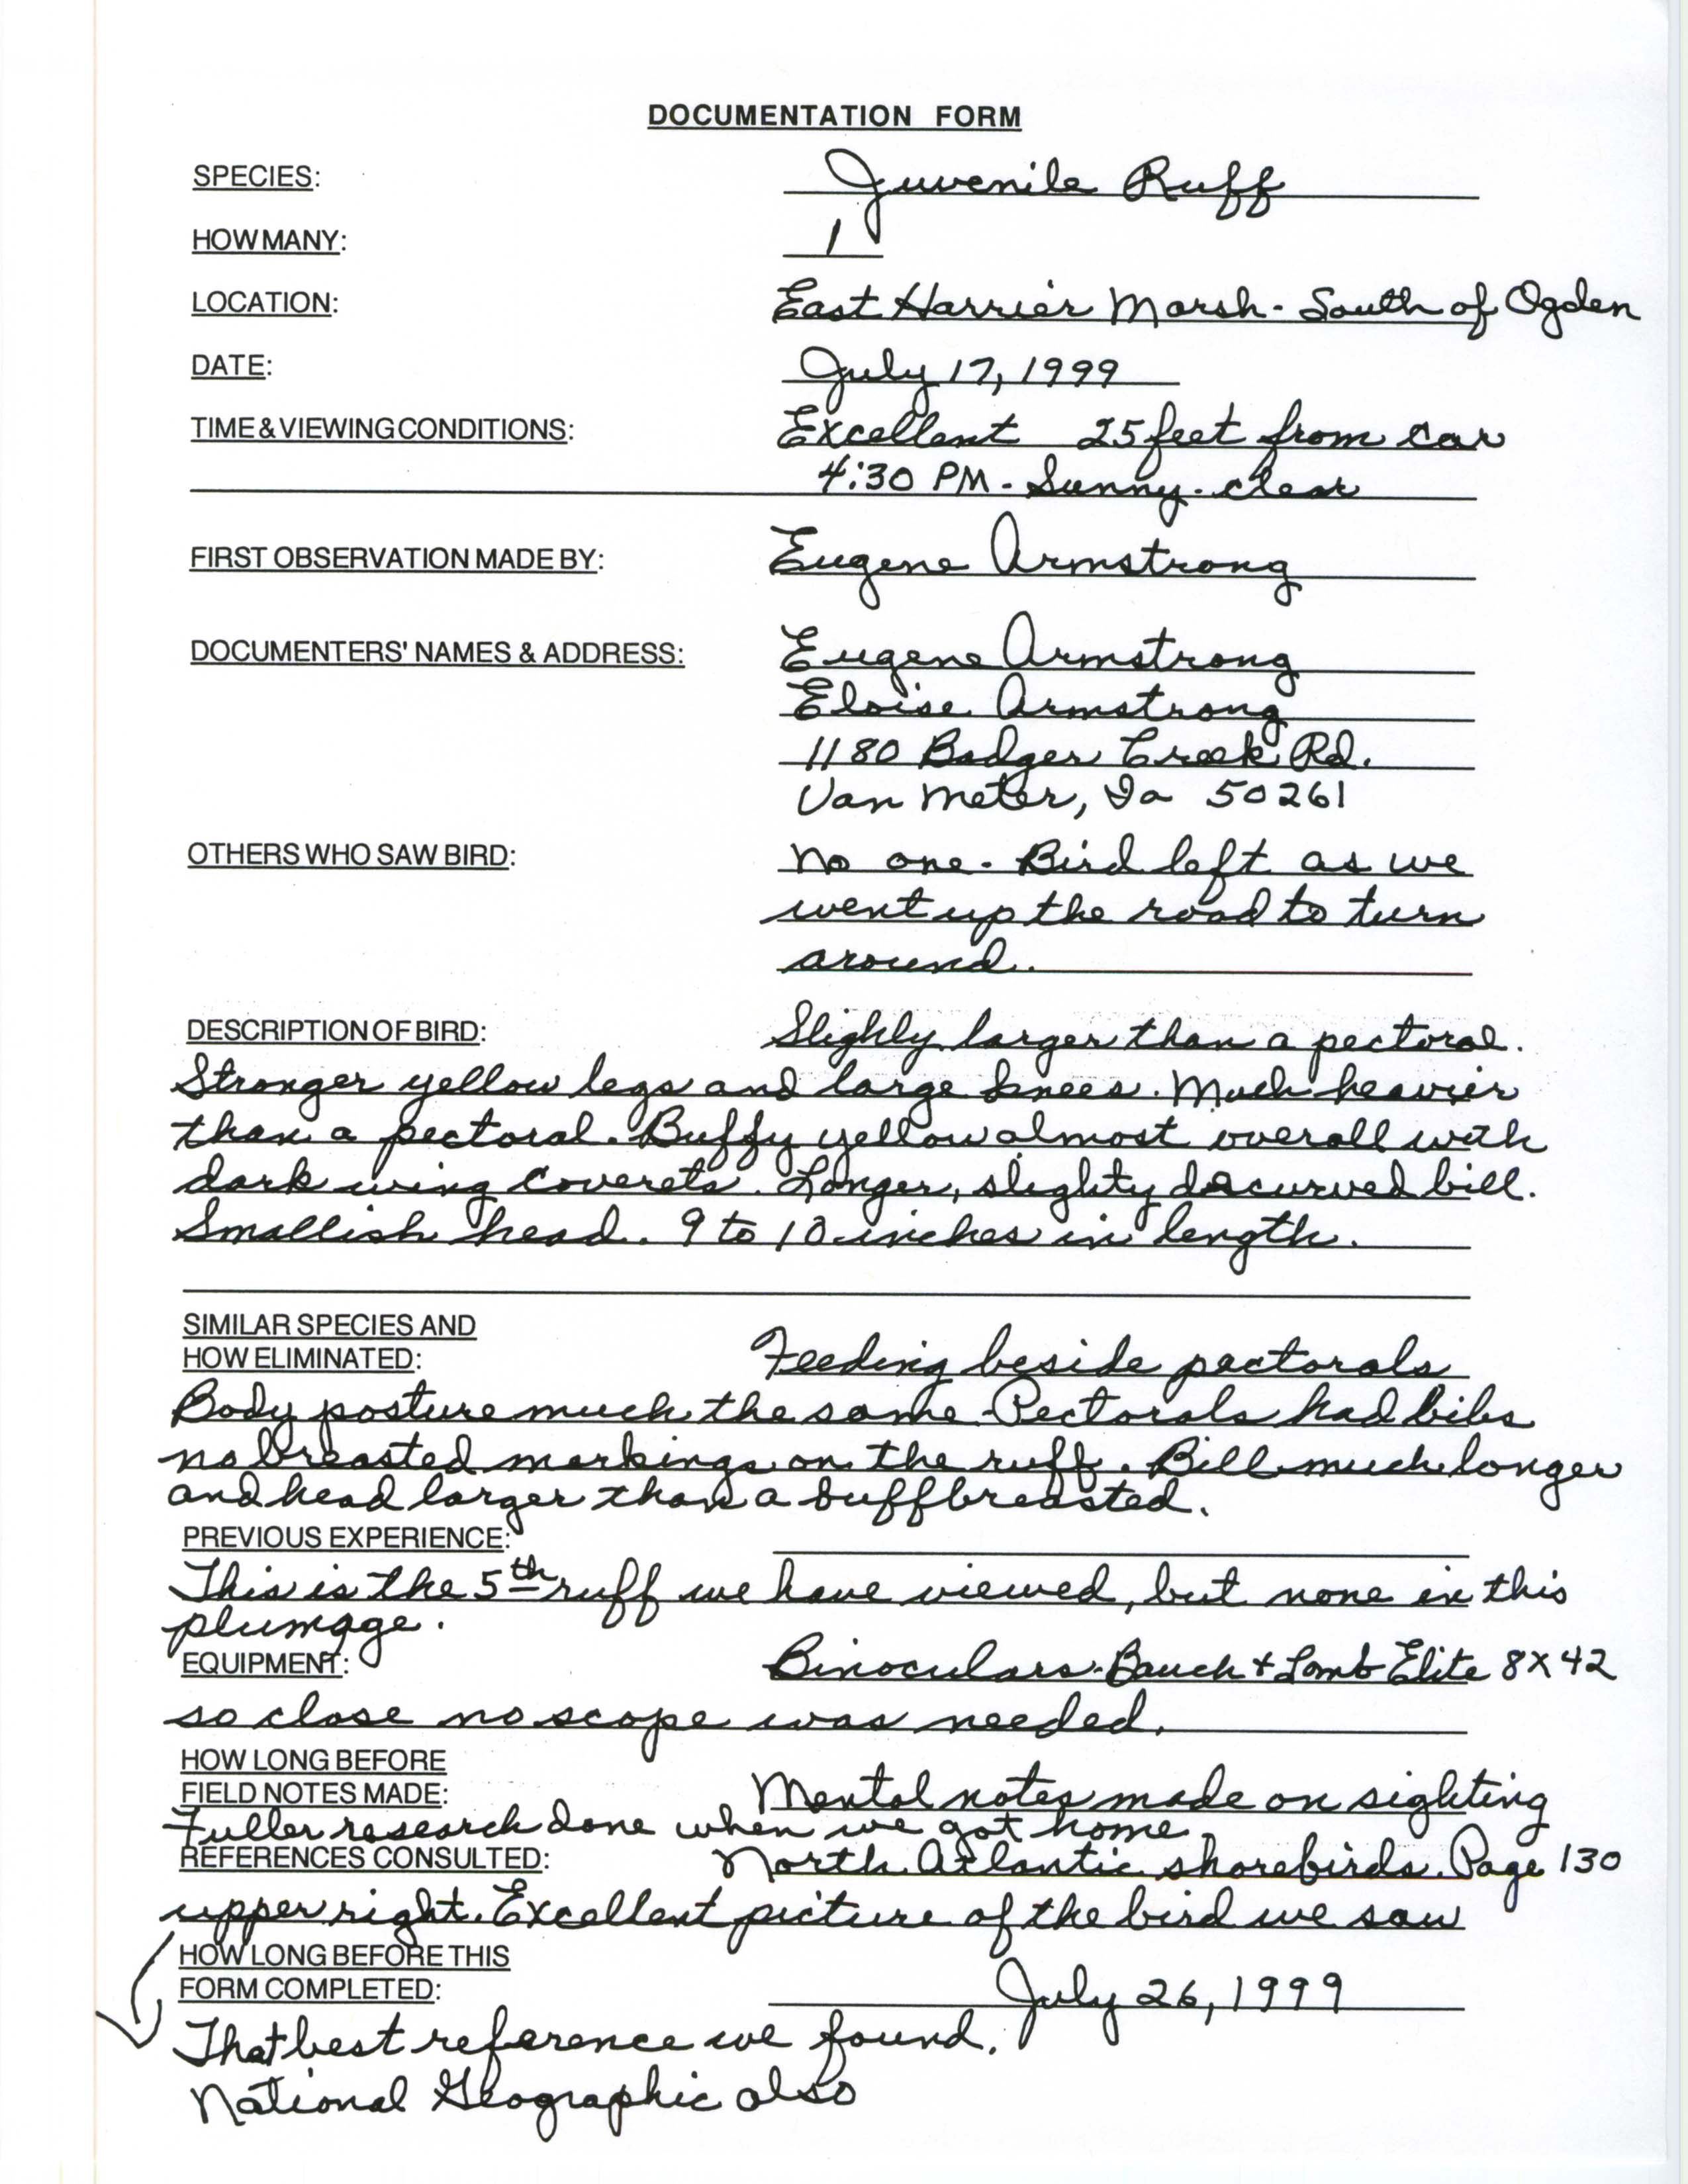 Documentation form, Ruff, July 17, 1999, Eugene Armstrong